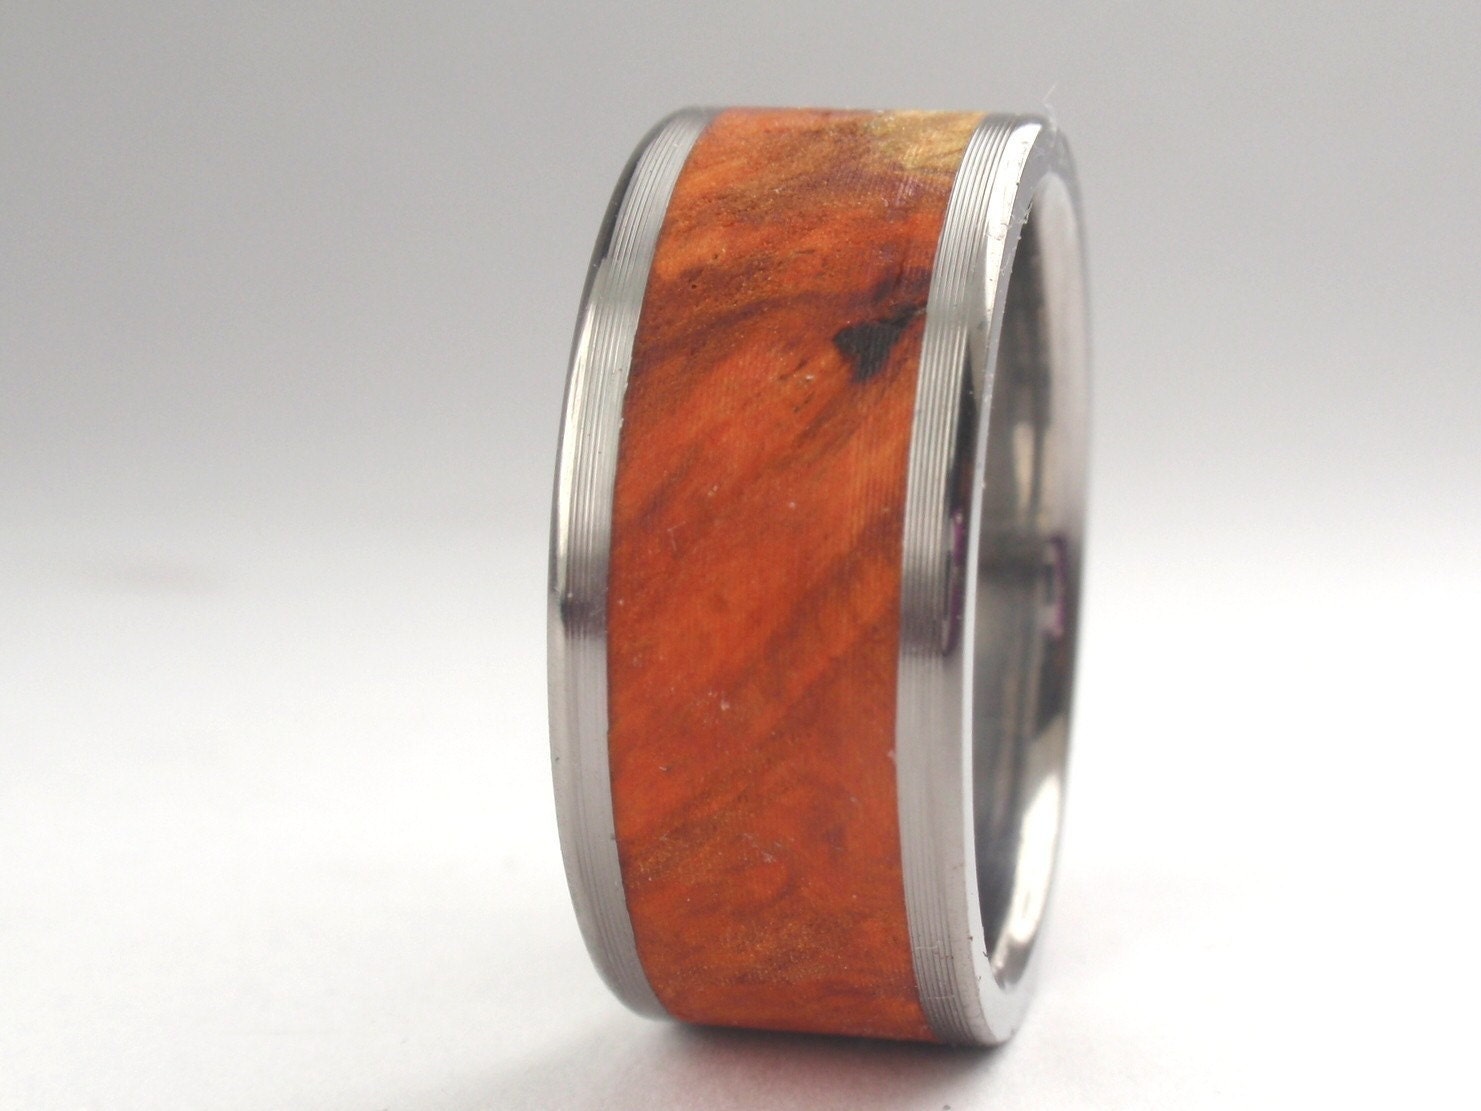 Amboyna Burl Wood Inlaid in Titanium Ring - Wooden Band Wedding Ring. From jewelrybyjohan